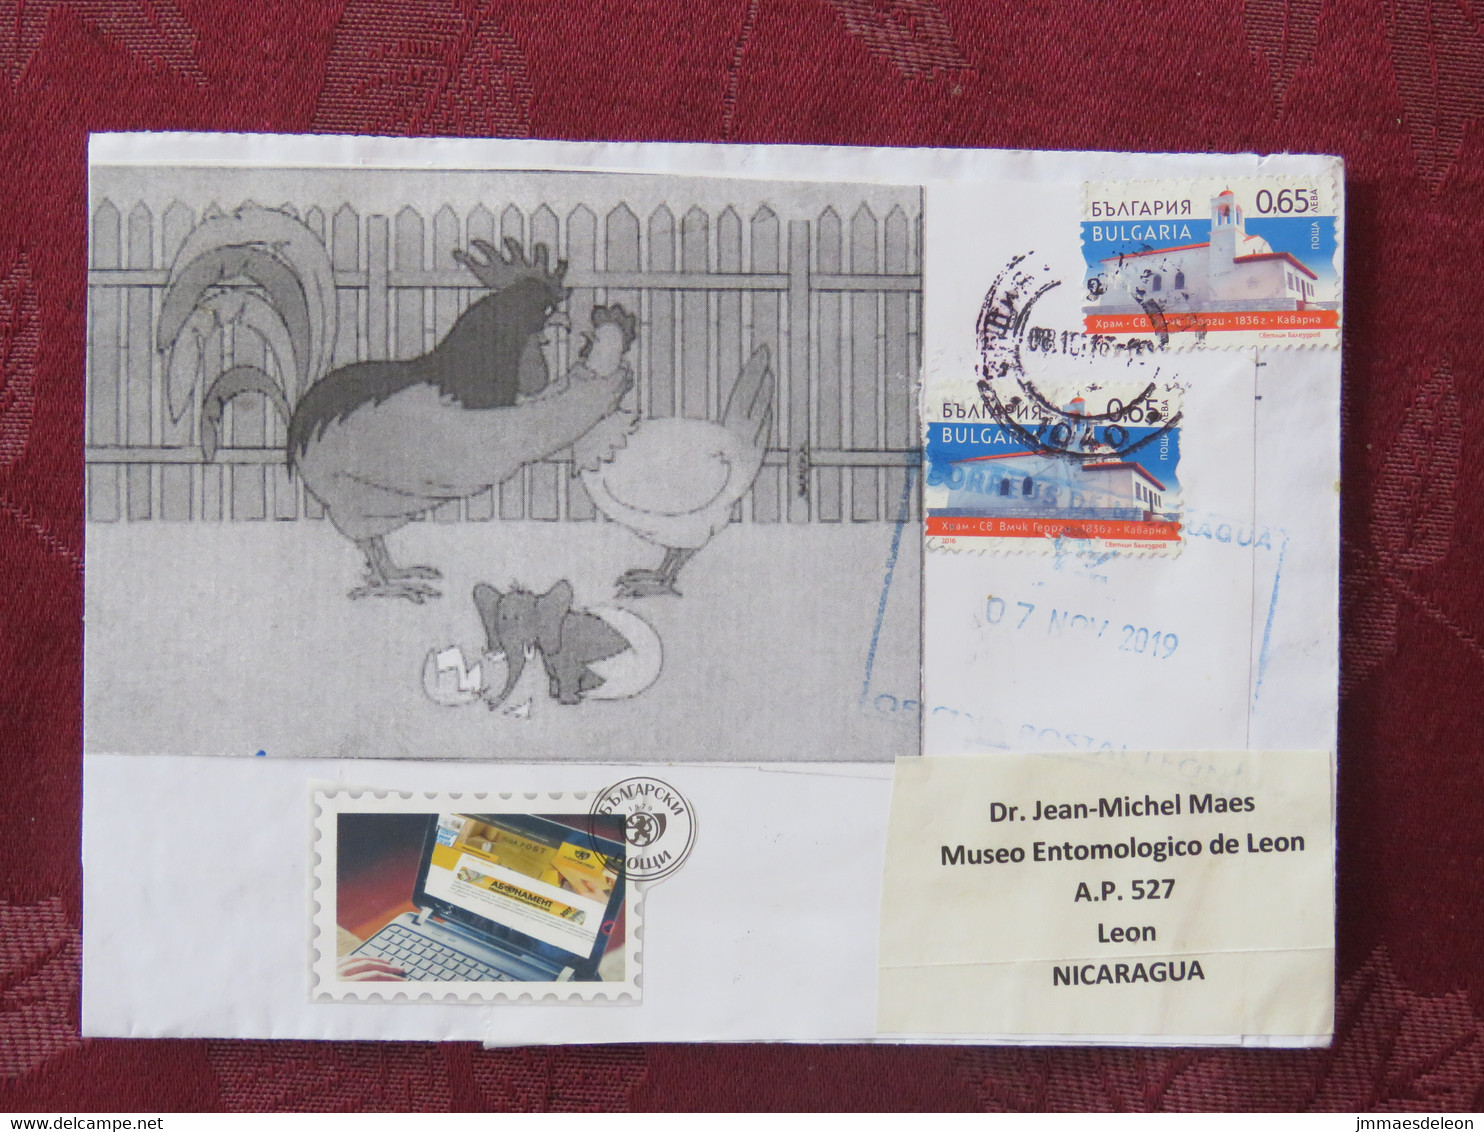 Bulgaria 2019 Cover To Nicaragua - Church - Chicken - Computer - Storia Postale